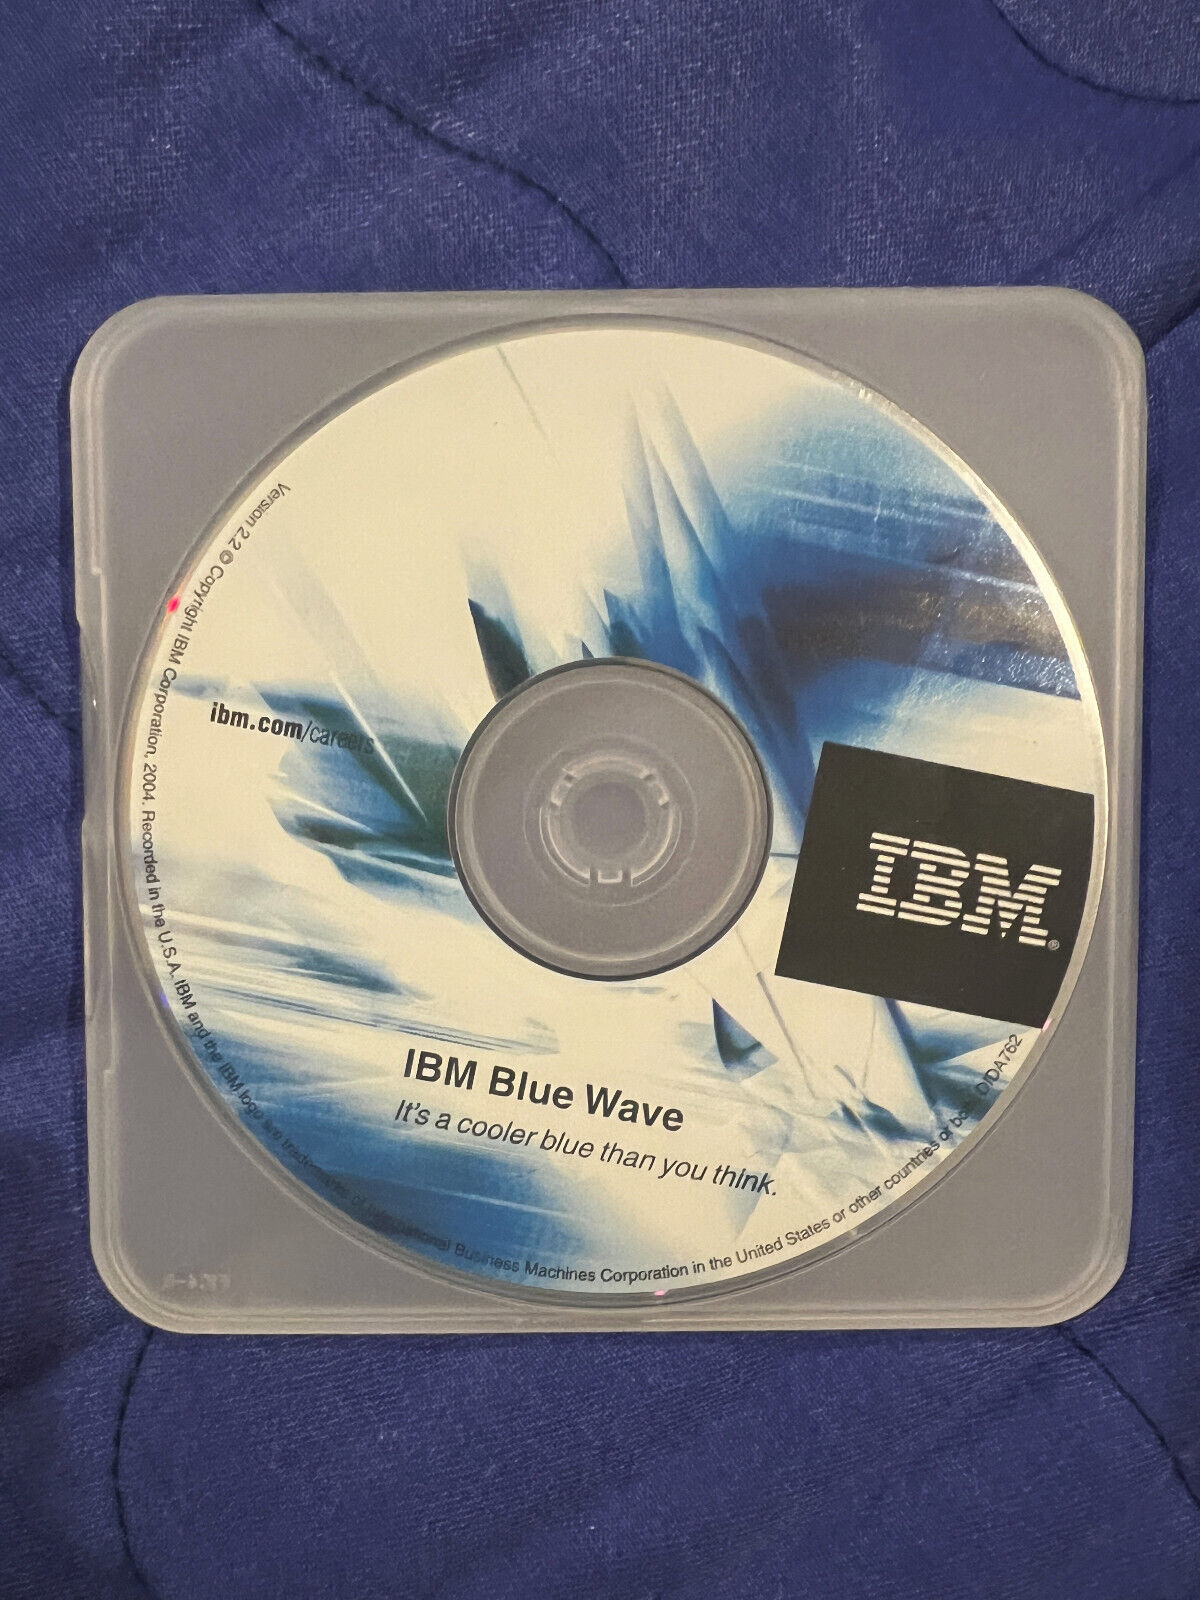 IBM International Business Machines Blue Wave CD